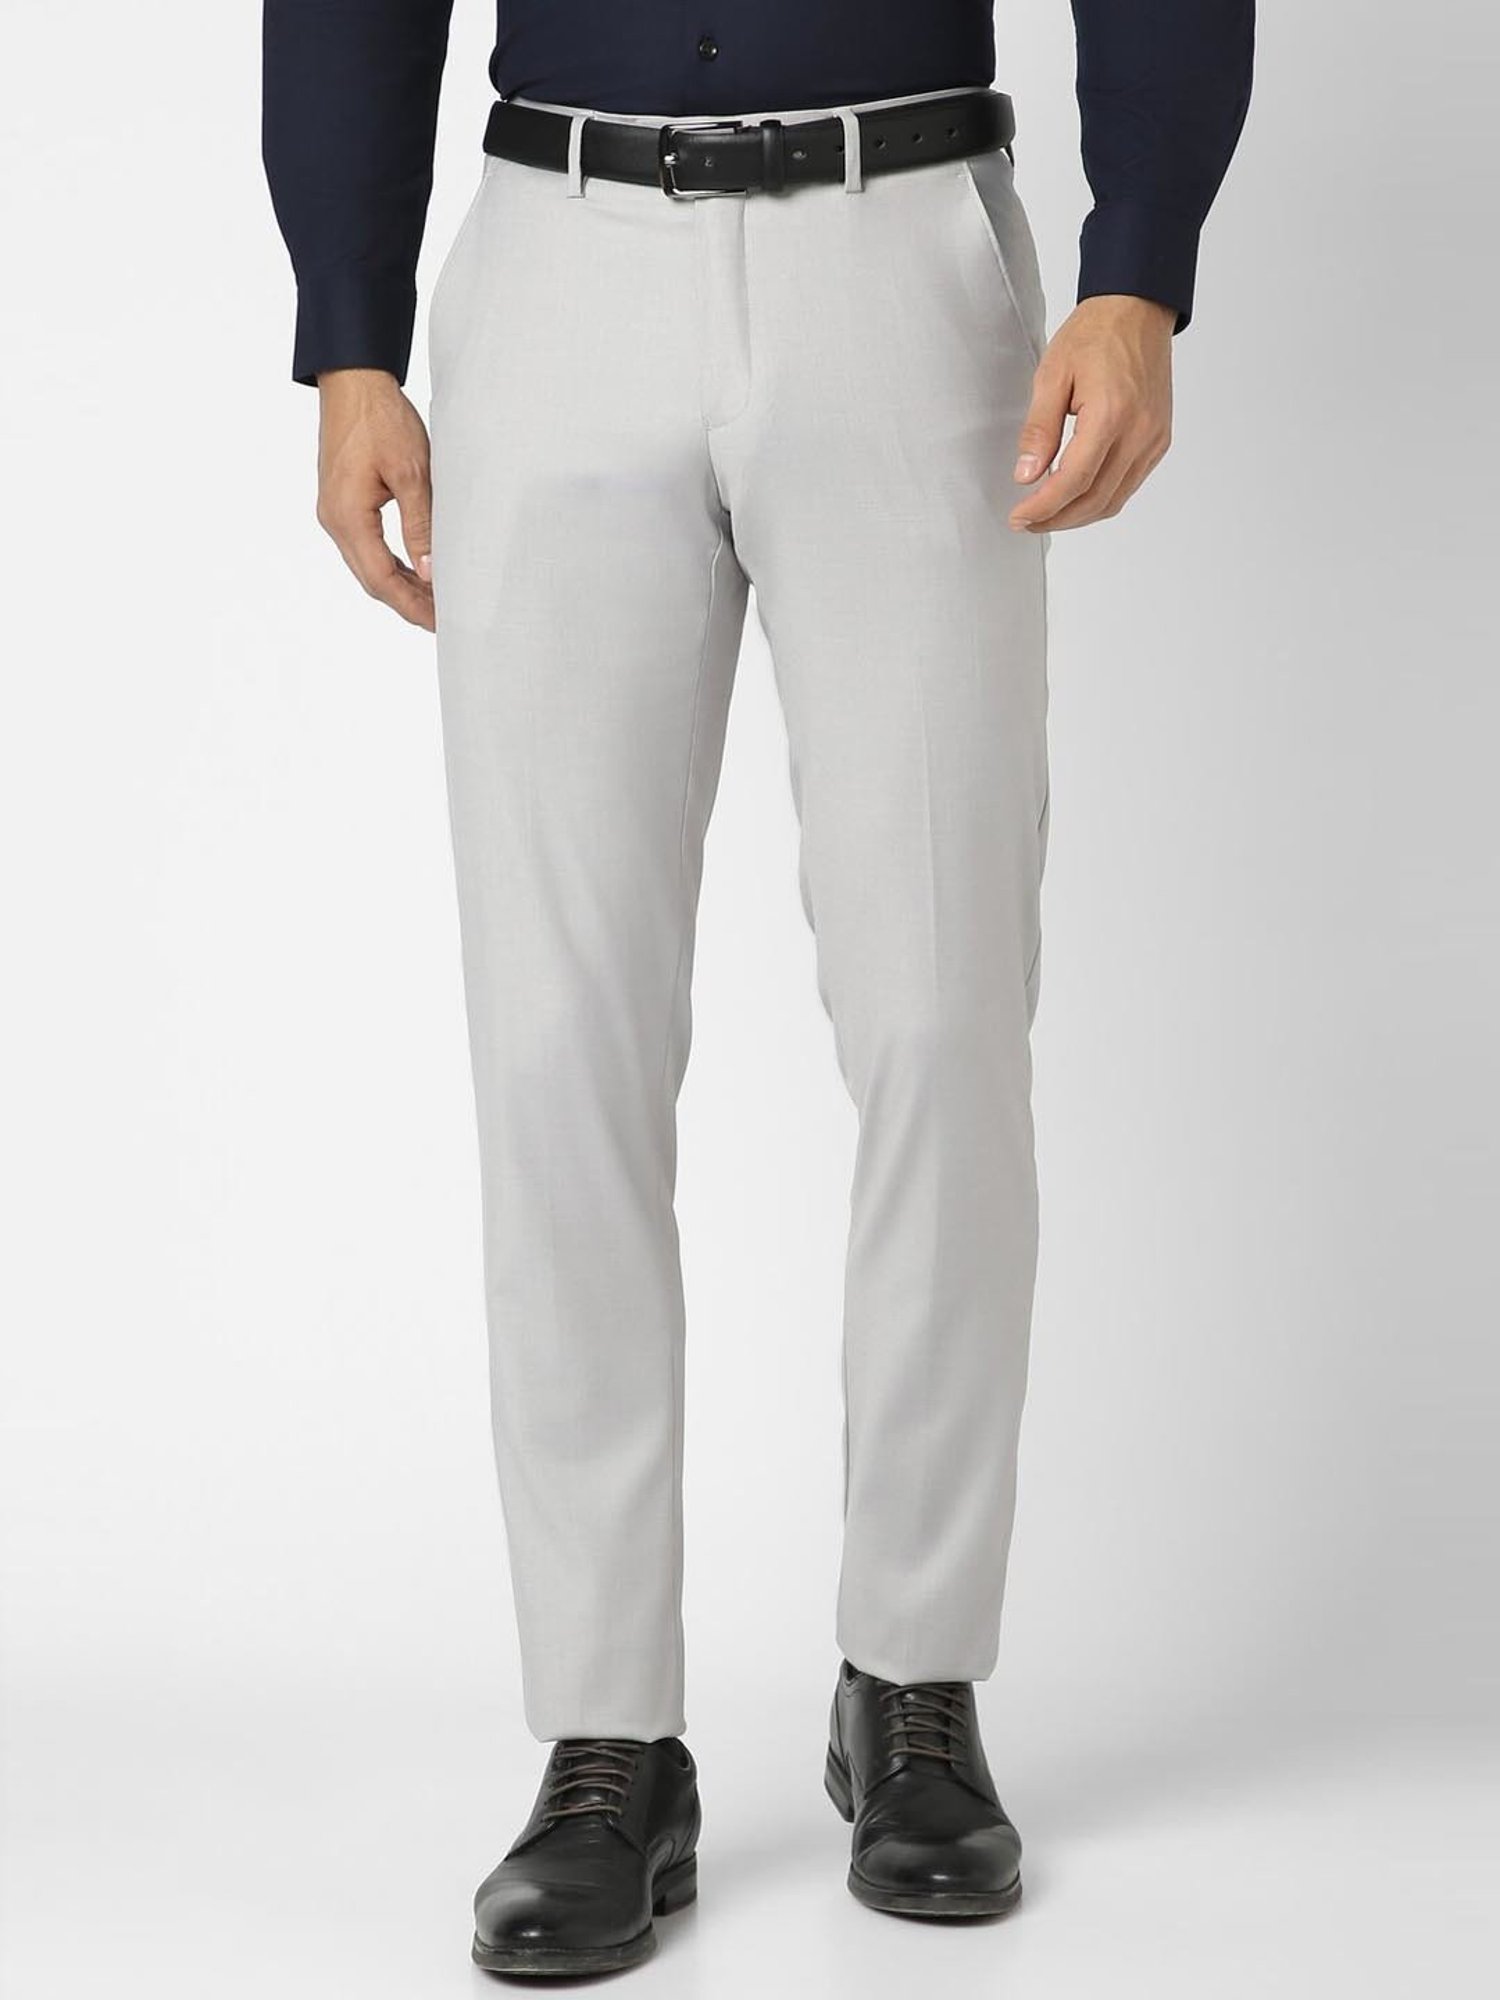 Buy U.S. POLO ASSN. Austin Trim Regular Fit Solid Trousers online